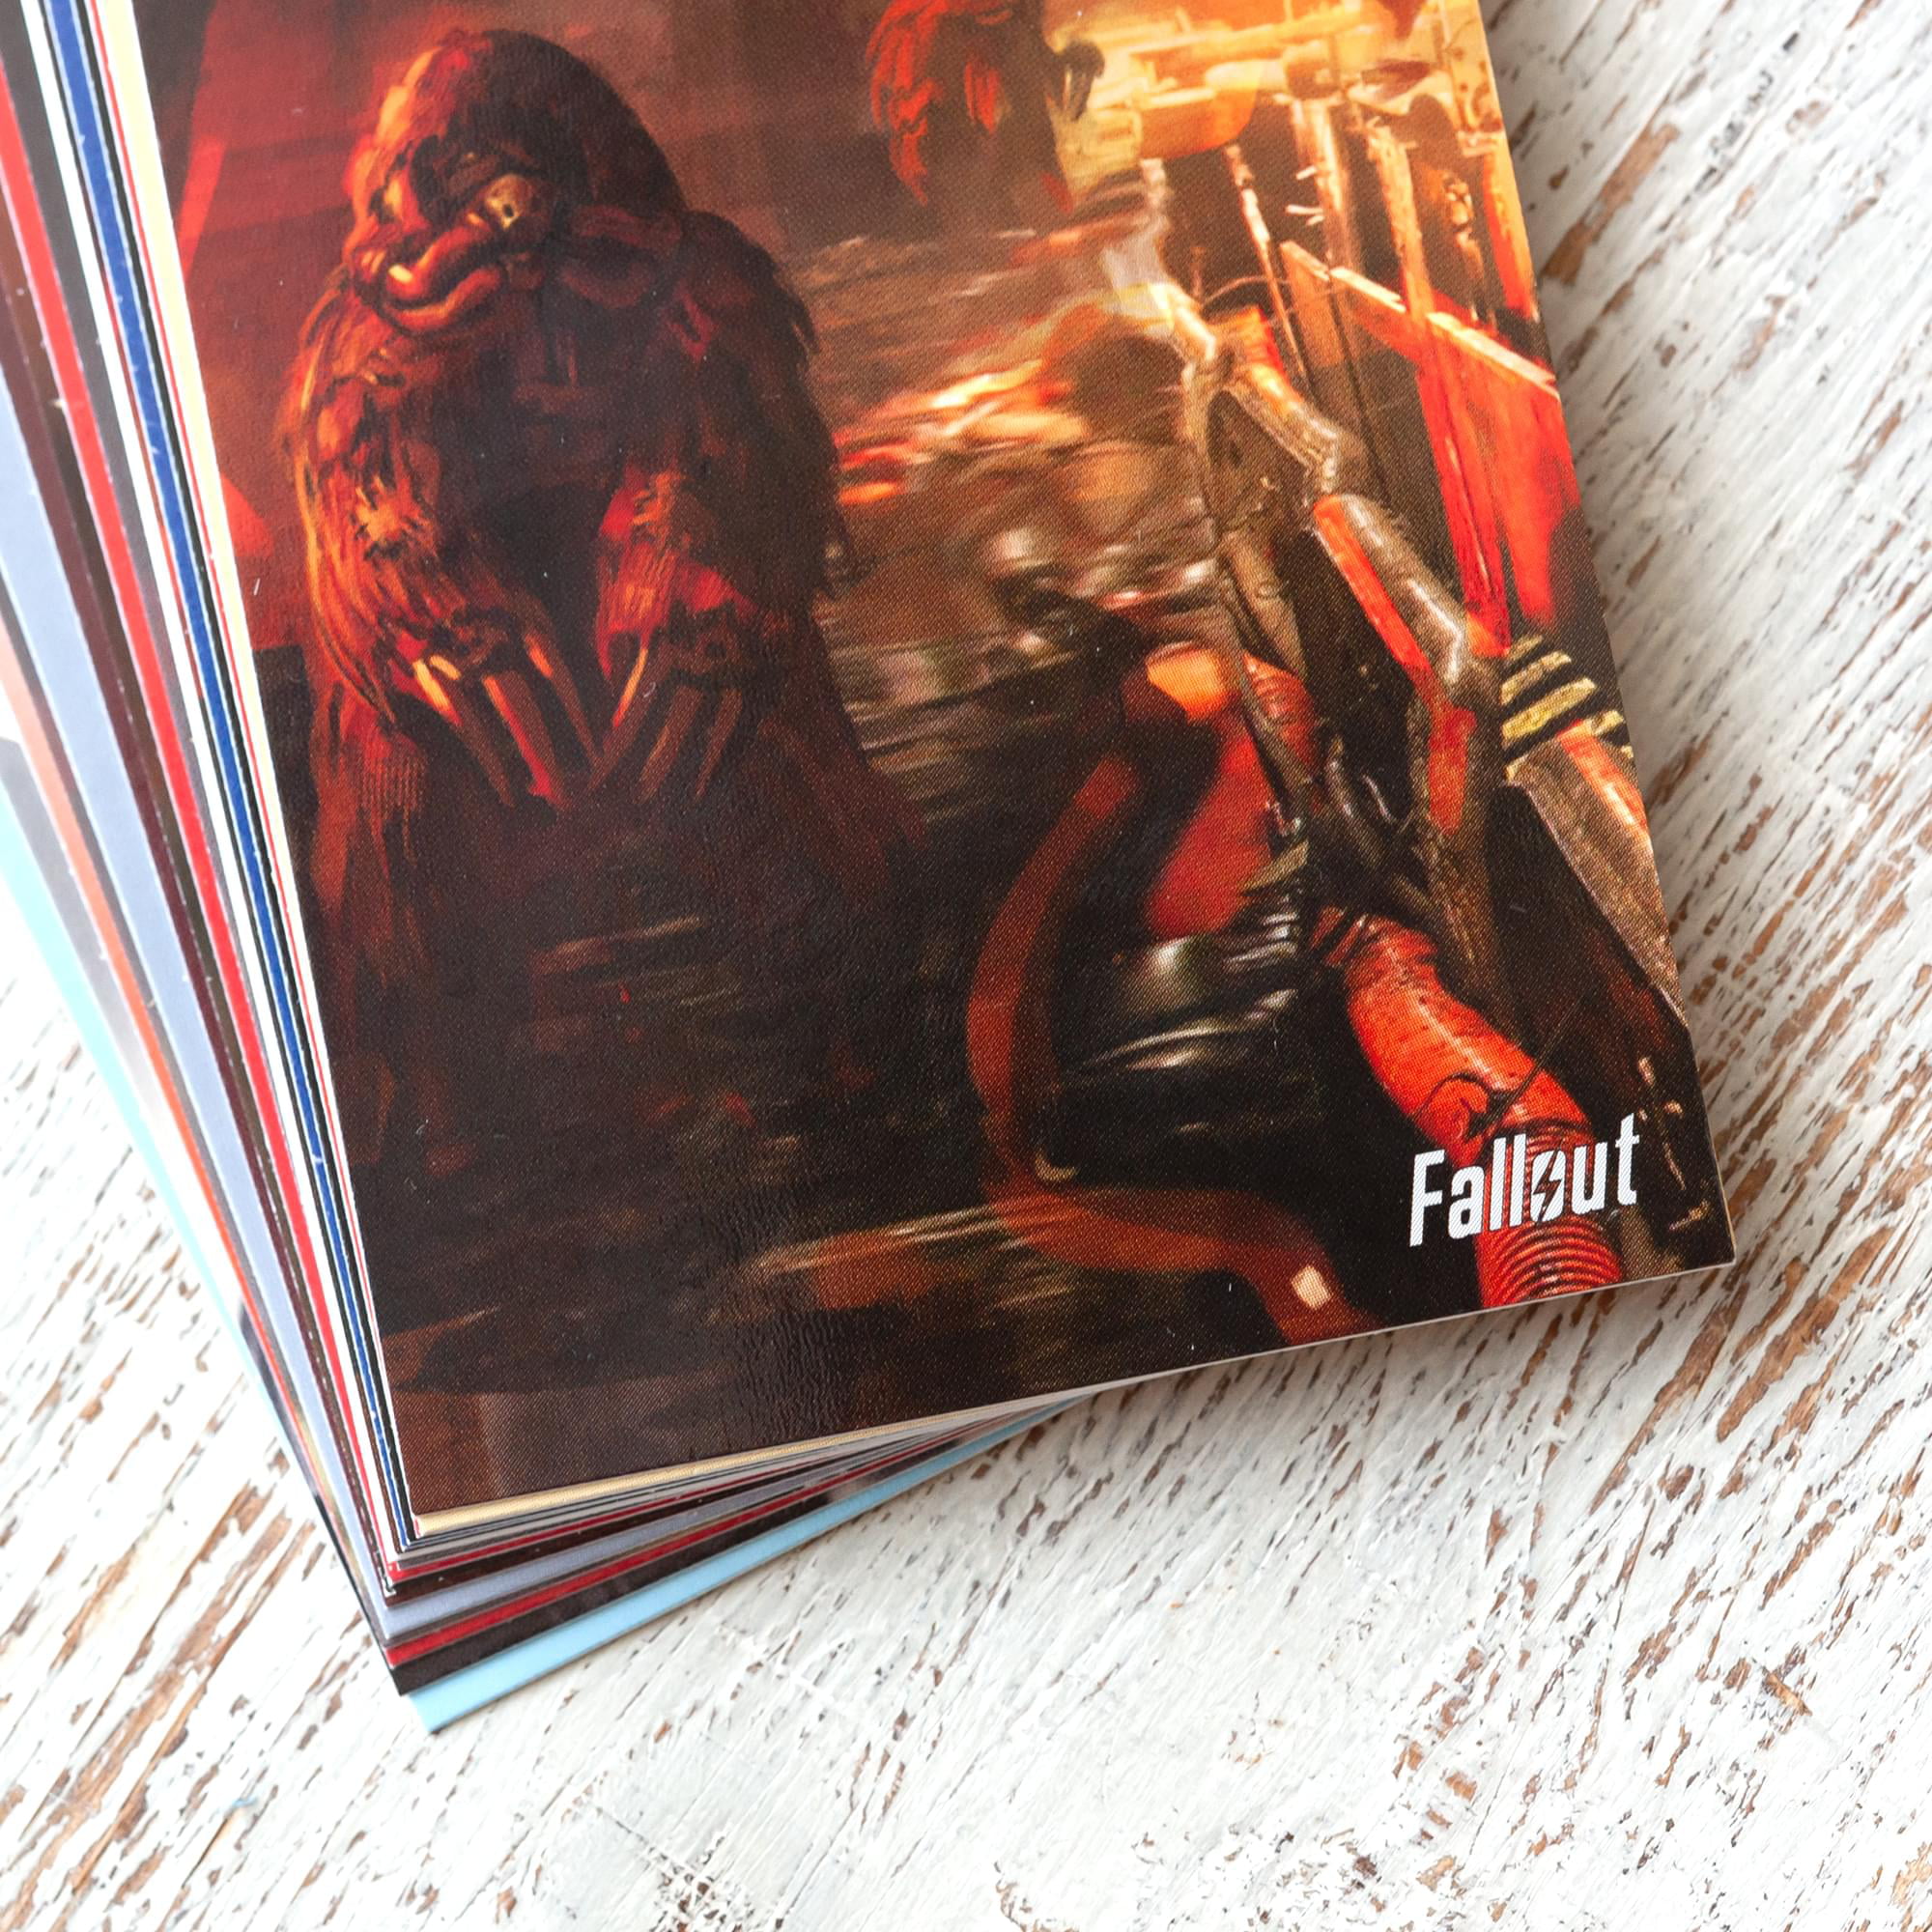 Fallout Trading Cards Serie 2Caja Sellada Hobbycontiene 24 paquetes sin abrir 